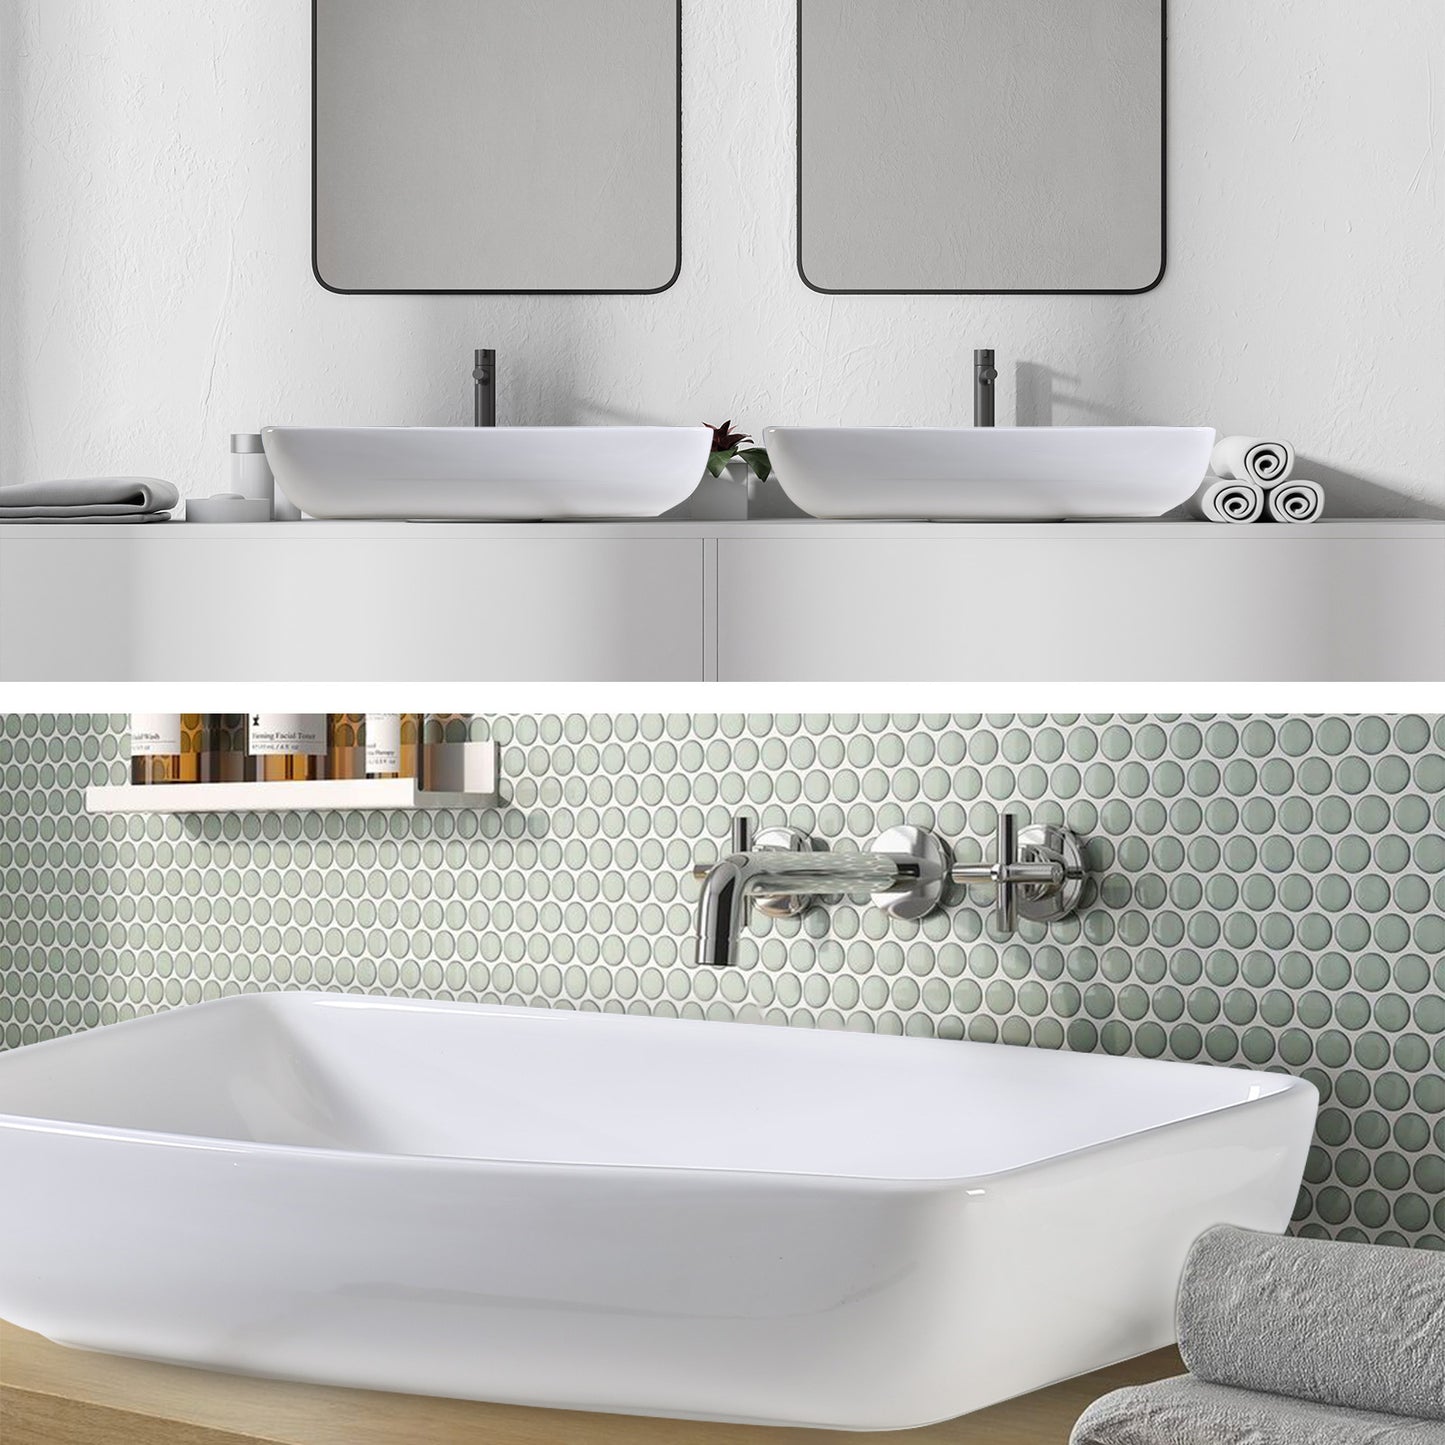 Muriel 60 x 38x 12cm White Ceramic Bathroom Basin Vanity Sink Above Counter Top Mount Bowl